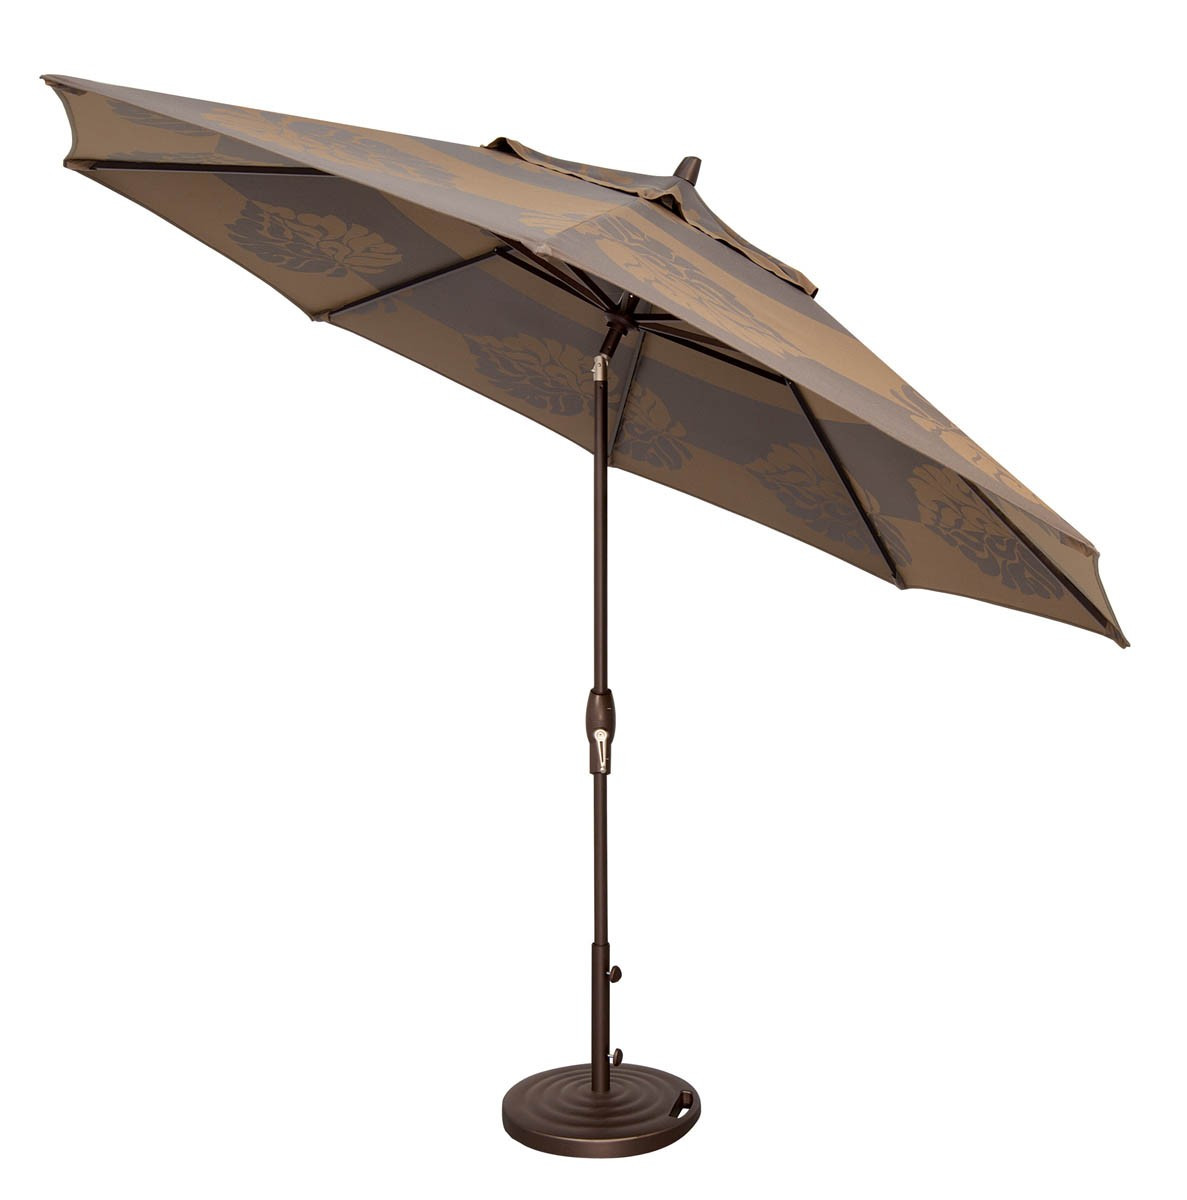 Best ideas about 11 Foot Patio Umbrella
. Save or Pin 11 foot Auto Tilt Umbrella Umbrellas Outdoor Shade Now.